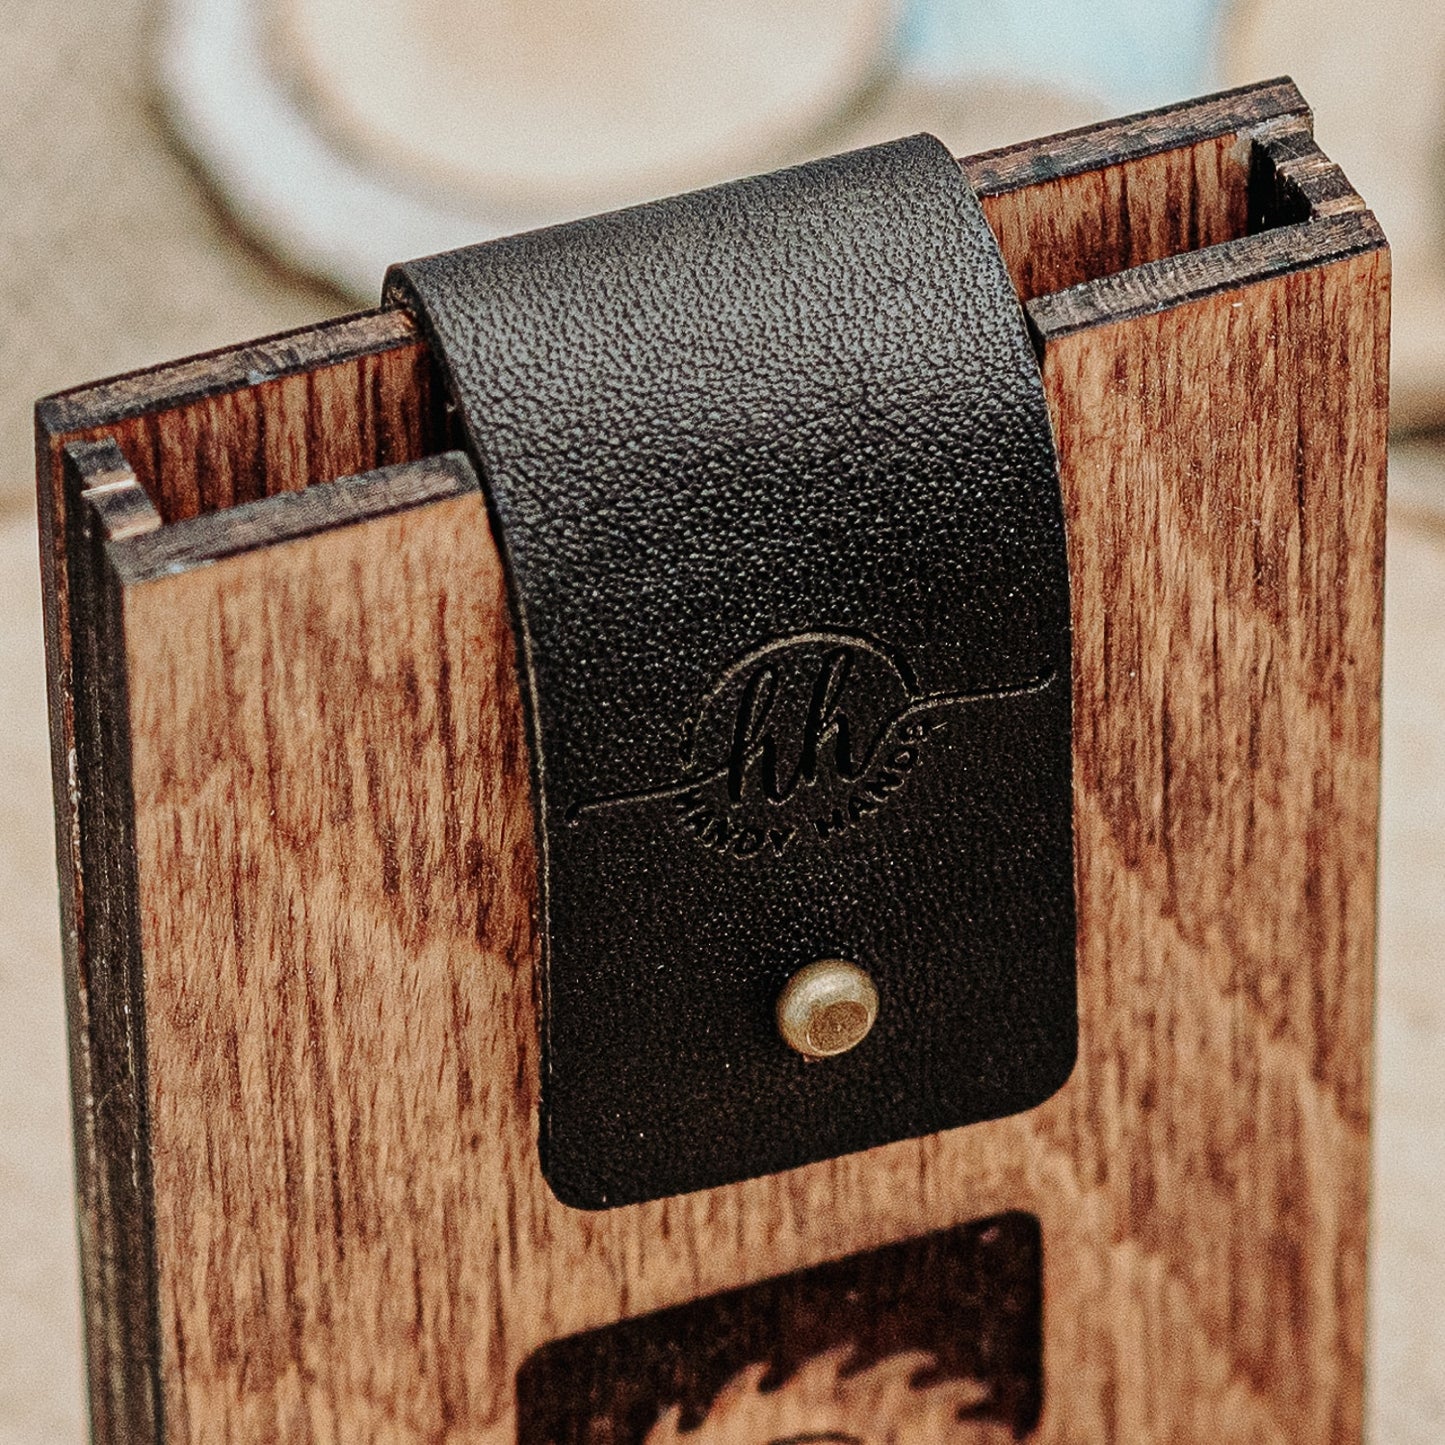 Portofel Universal Premium din lemn Slim HH938 Personalizat cu Catarama de Piele 7x9.8 cm